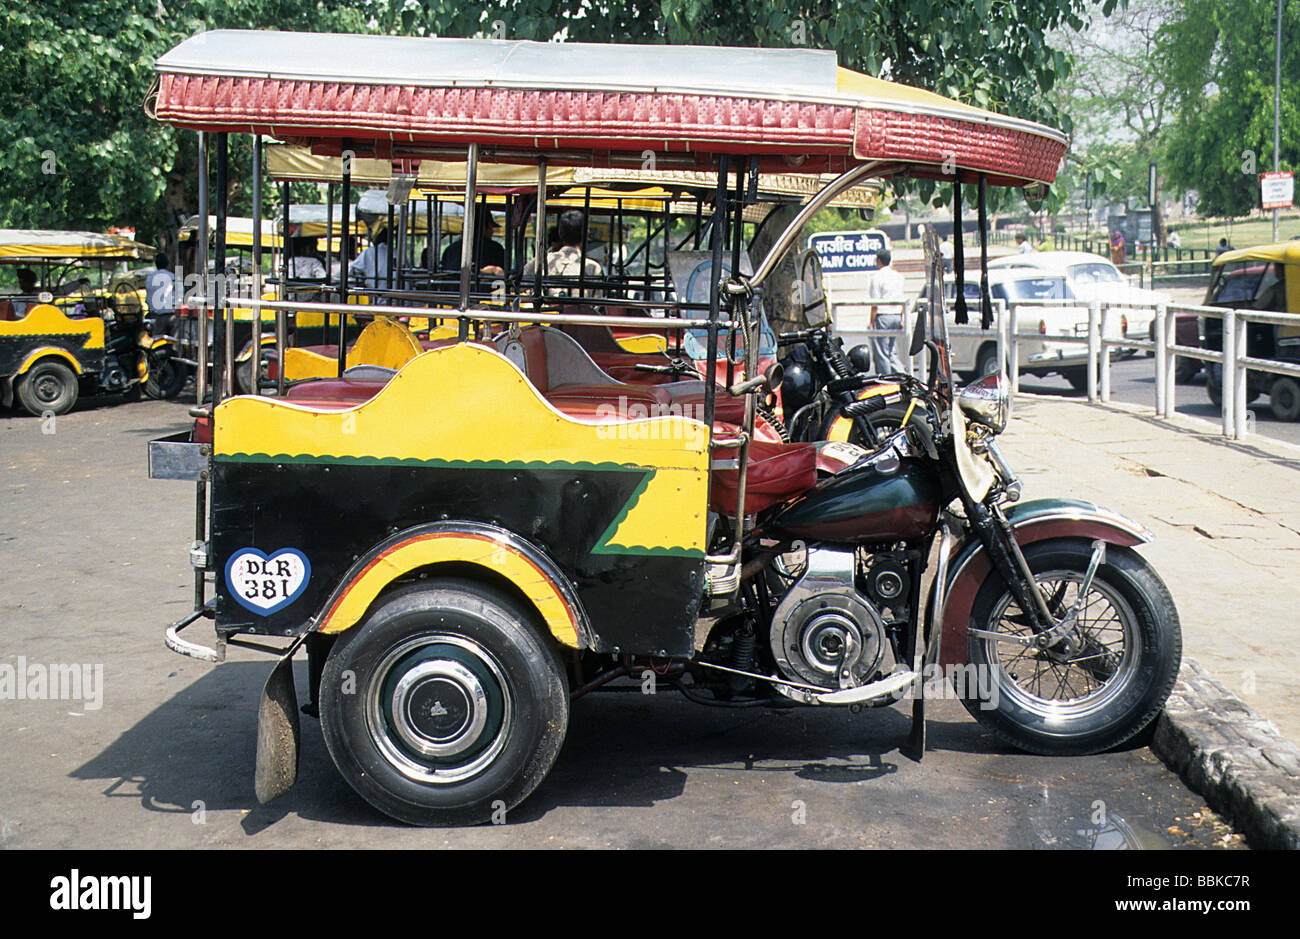 Delhi Three Wheeled Harley Davidson Motor Bike Adapted As A Public Service Vehicle Stock Photo Alamy